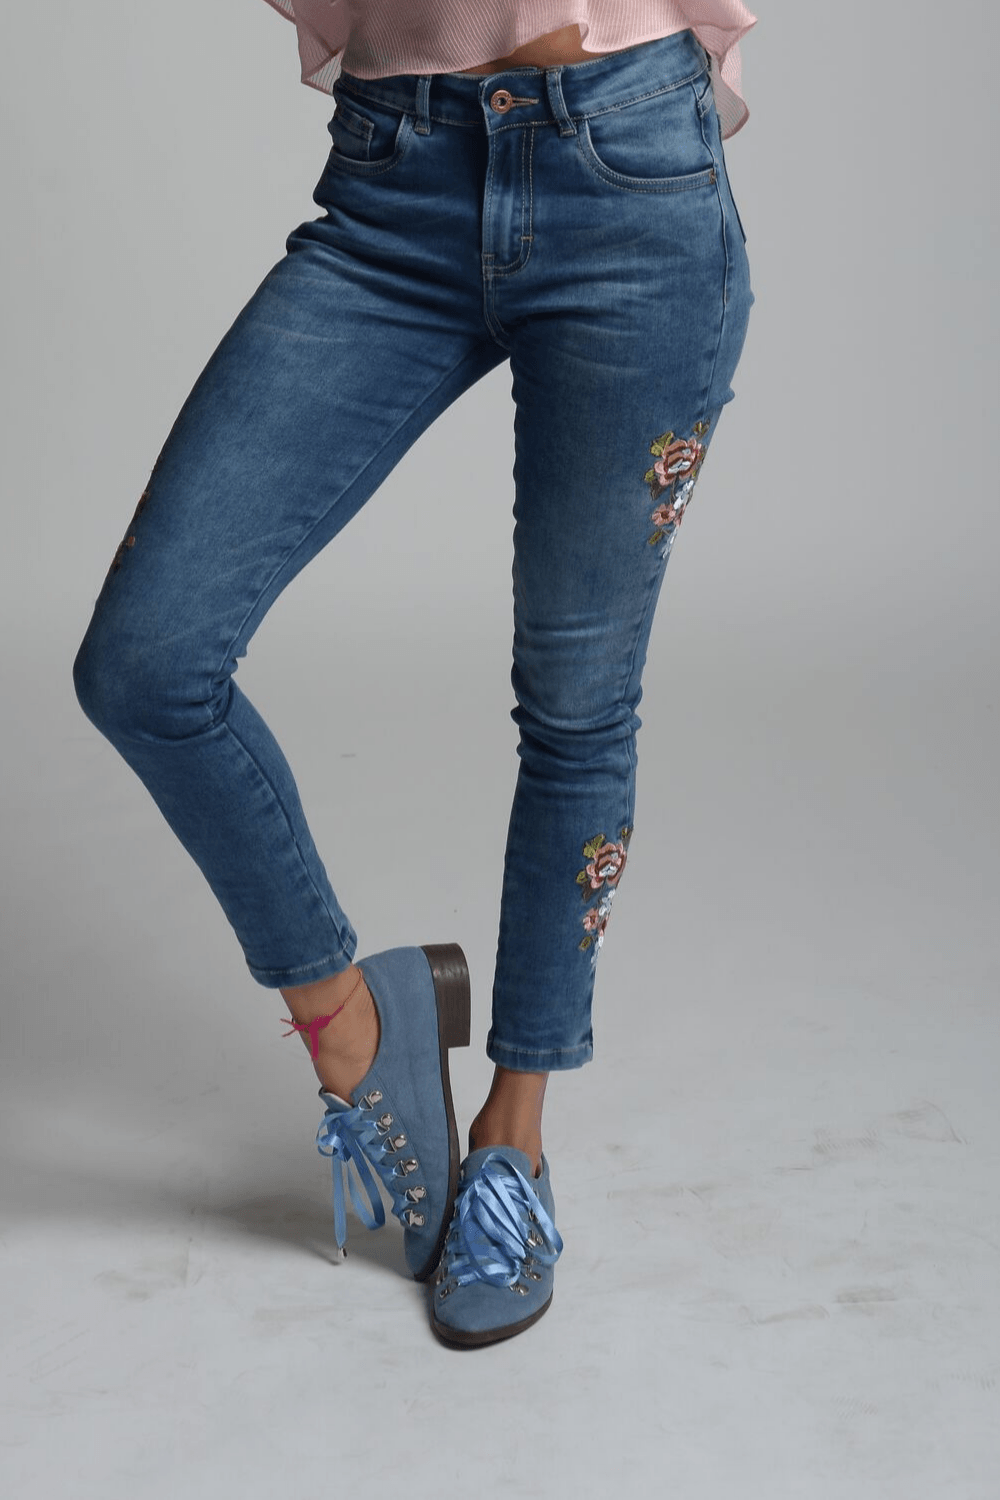 jeans-desgastes-bordados-flores2